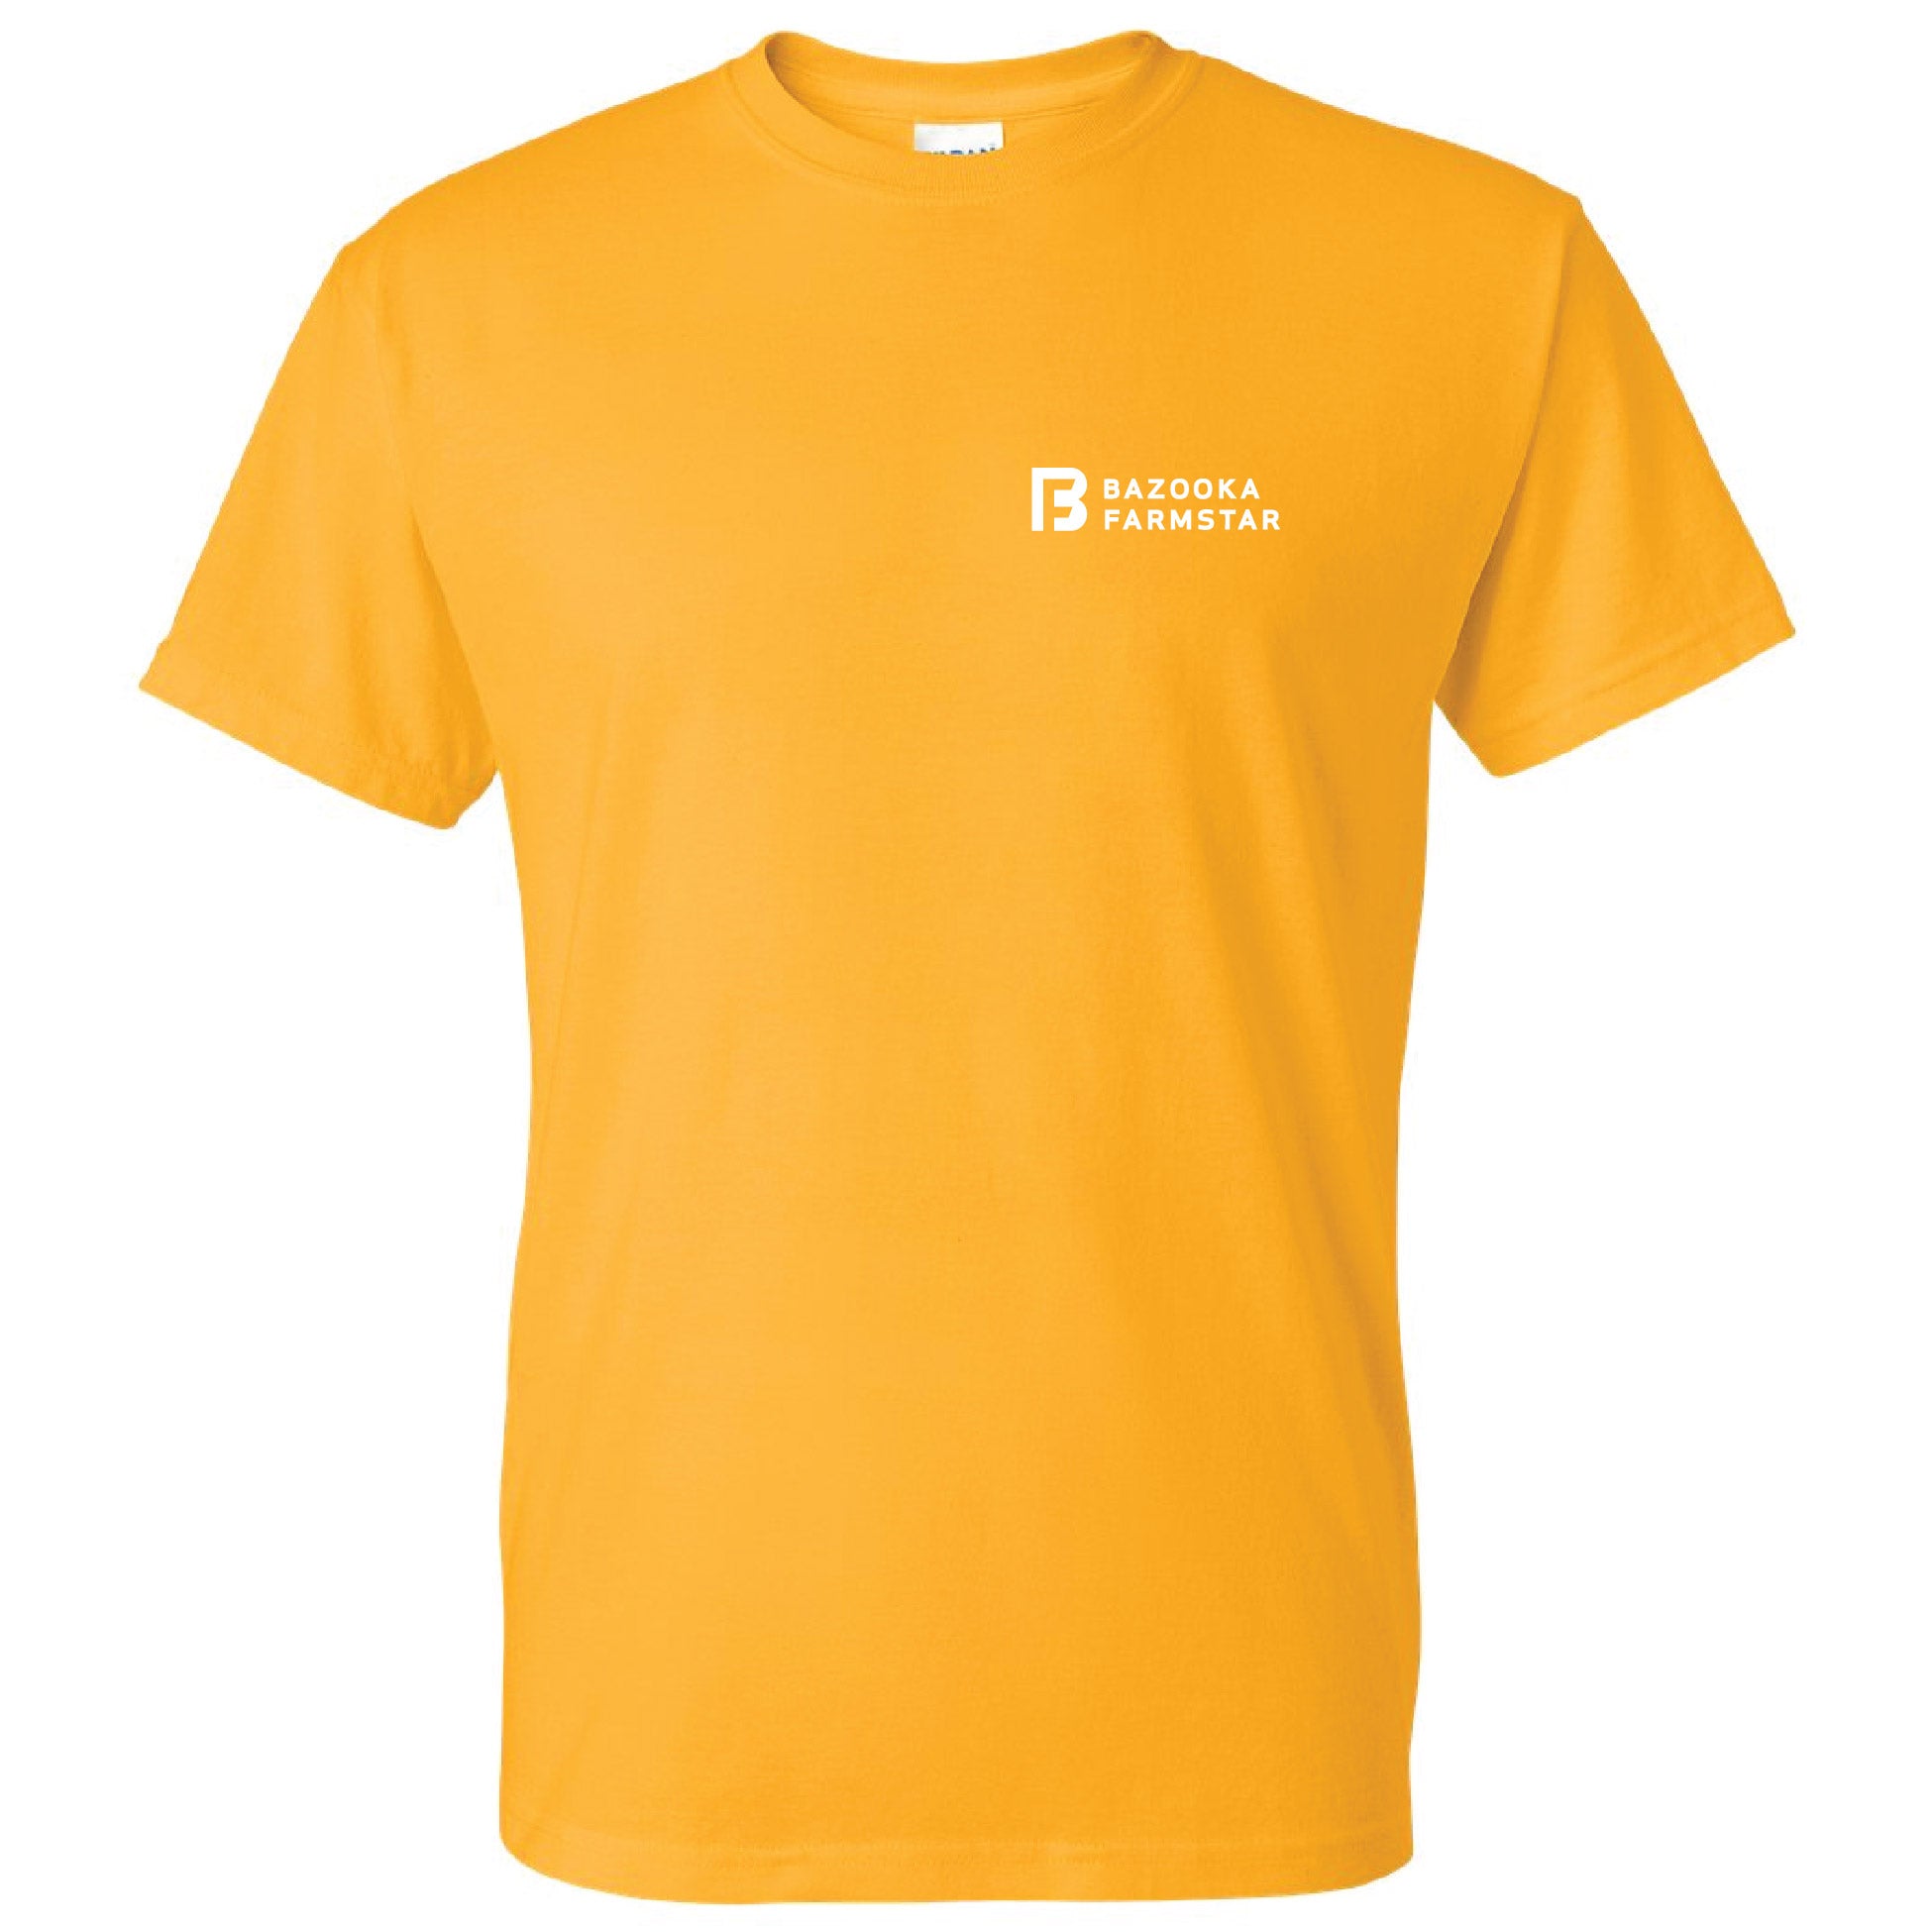 Bazooka Farmstar T-Shirt - 1-Color Design